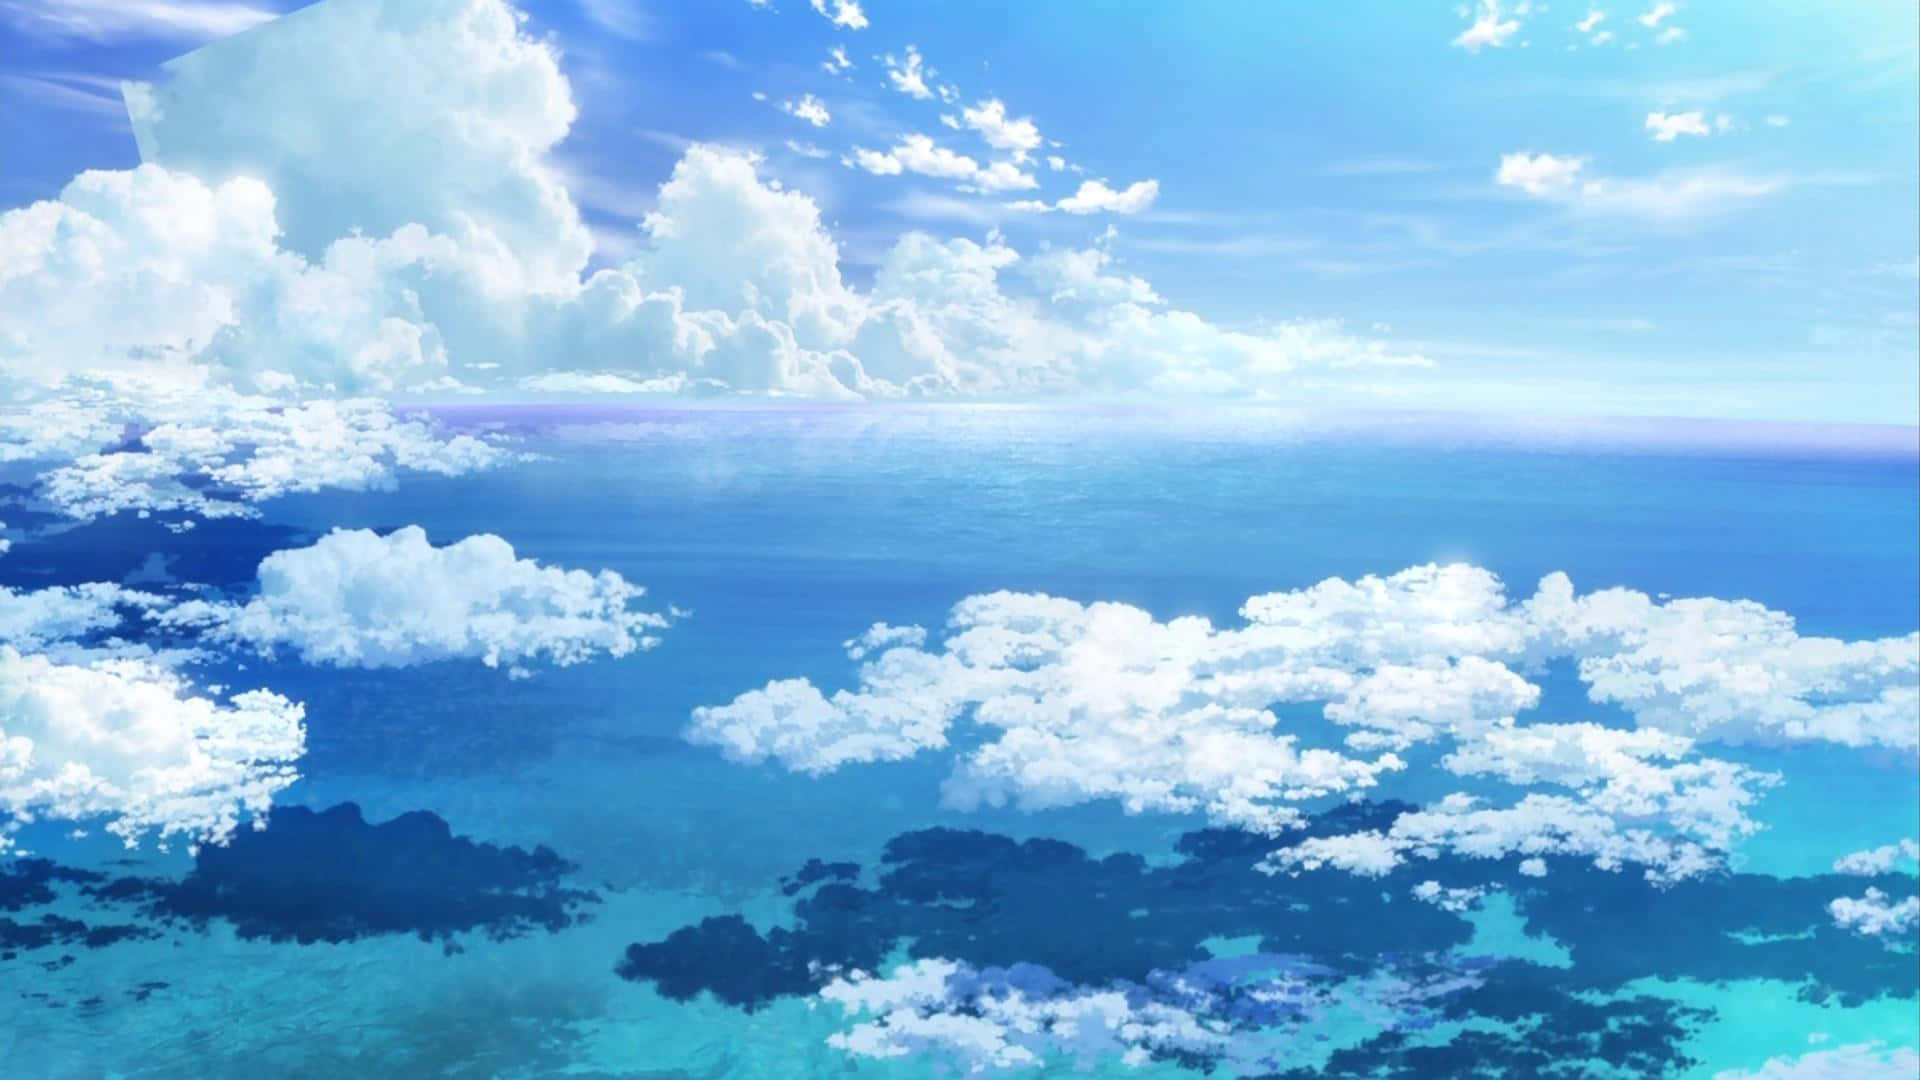 Anime Sky And Ocean Wallpaper